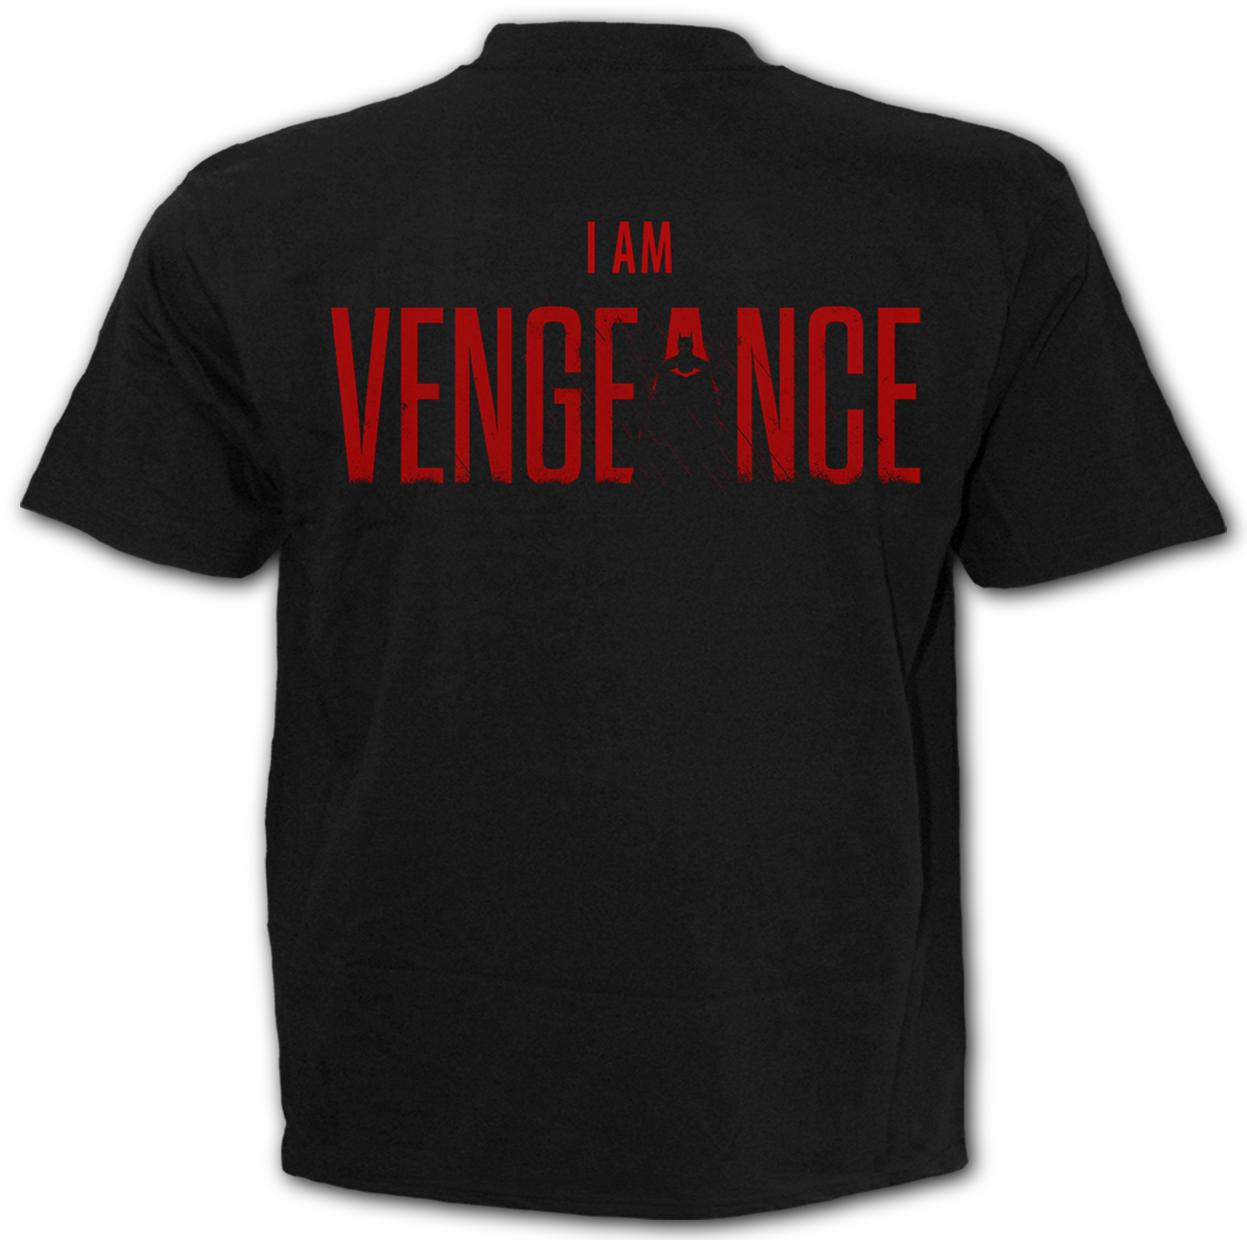 The Batman - Raining Vengeance - T-Shirt Black